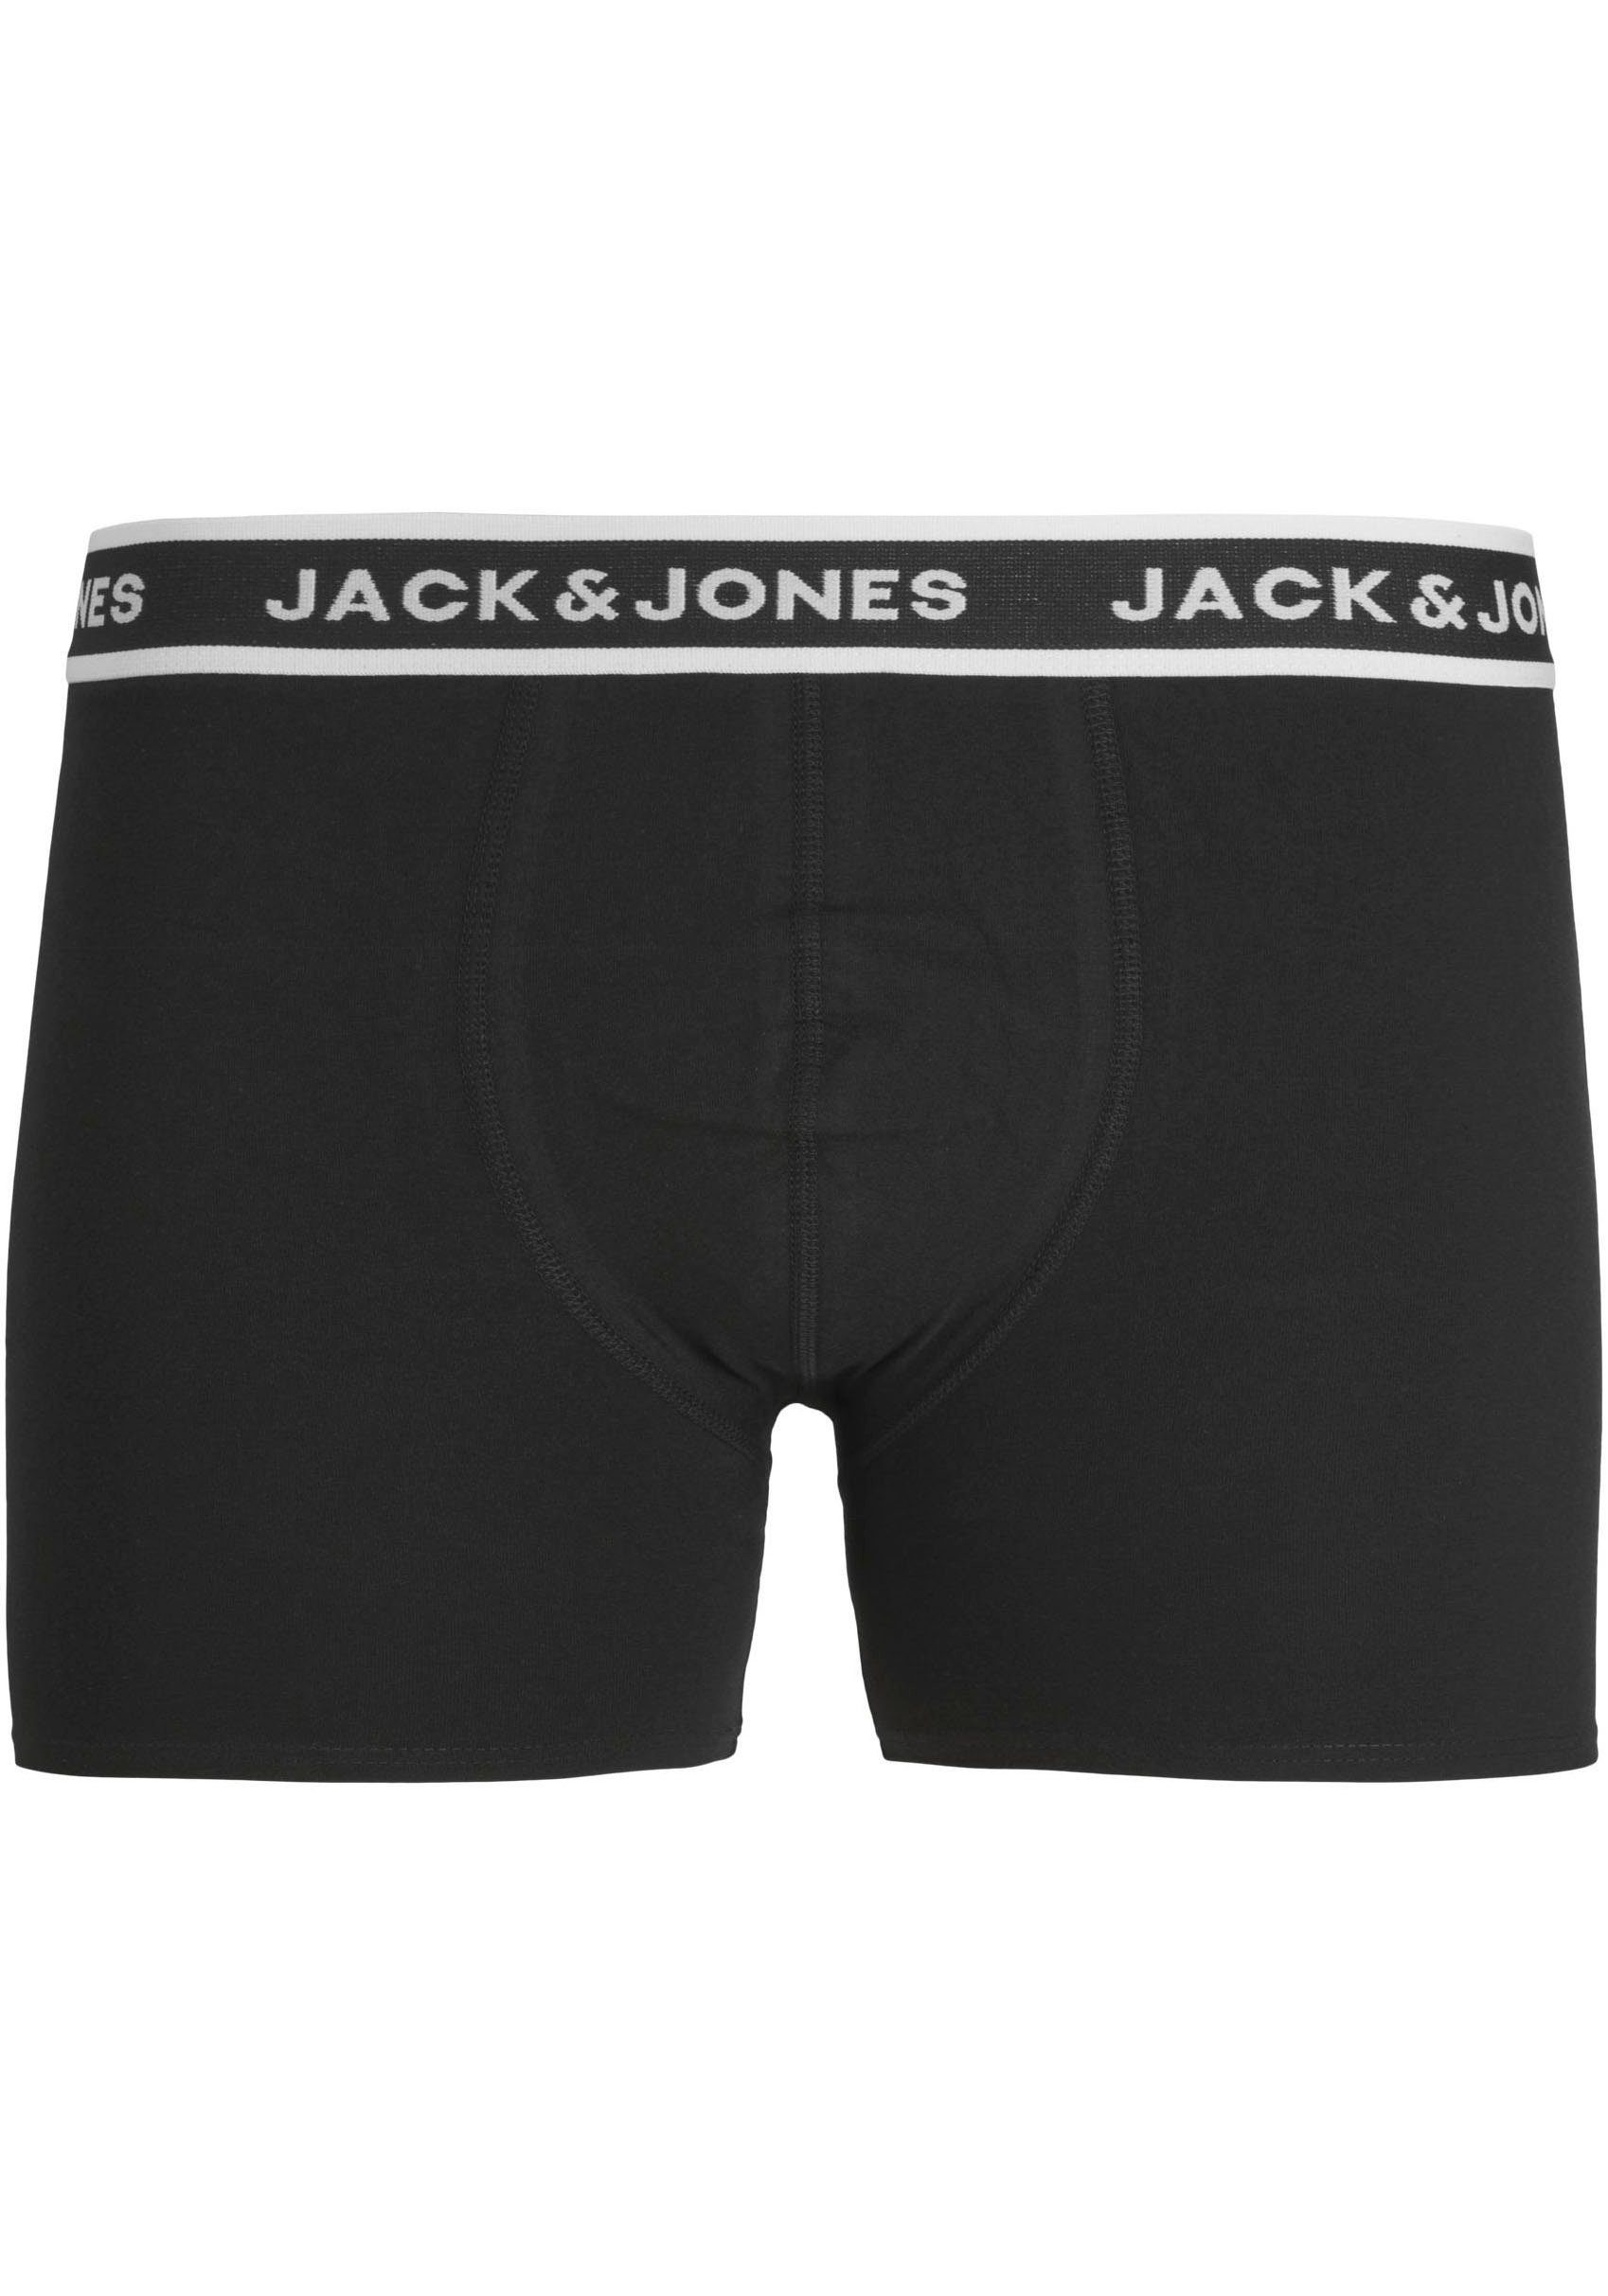 Jack & Jones Boxershorts 3-St) BRIEFS NOOS JACSOLID (Packung, black BOXER PACK 3